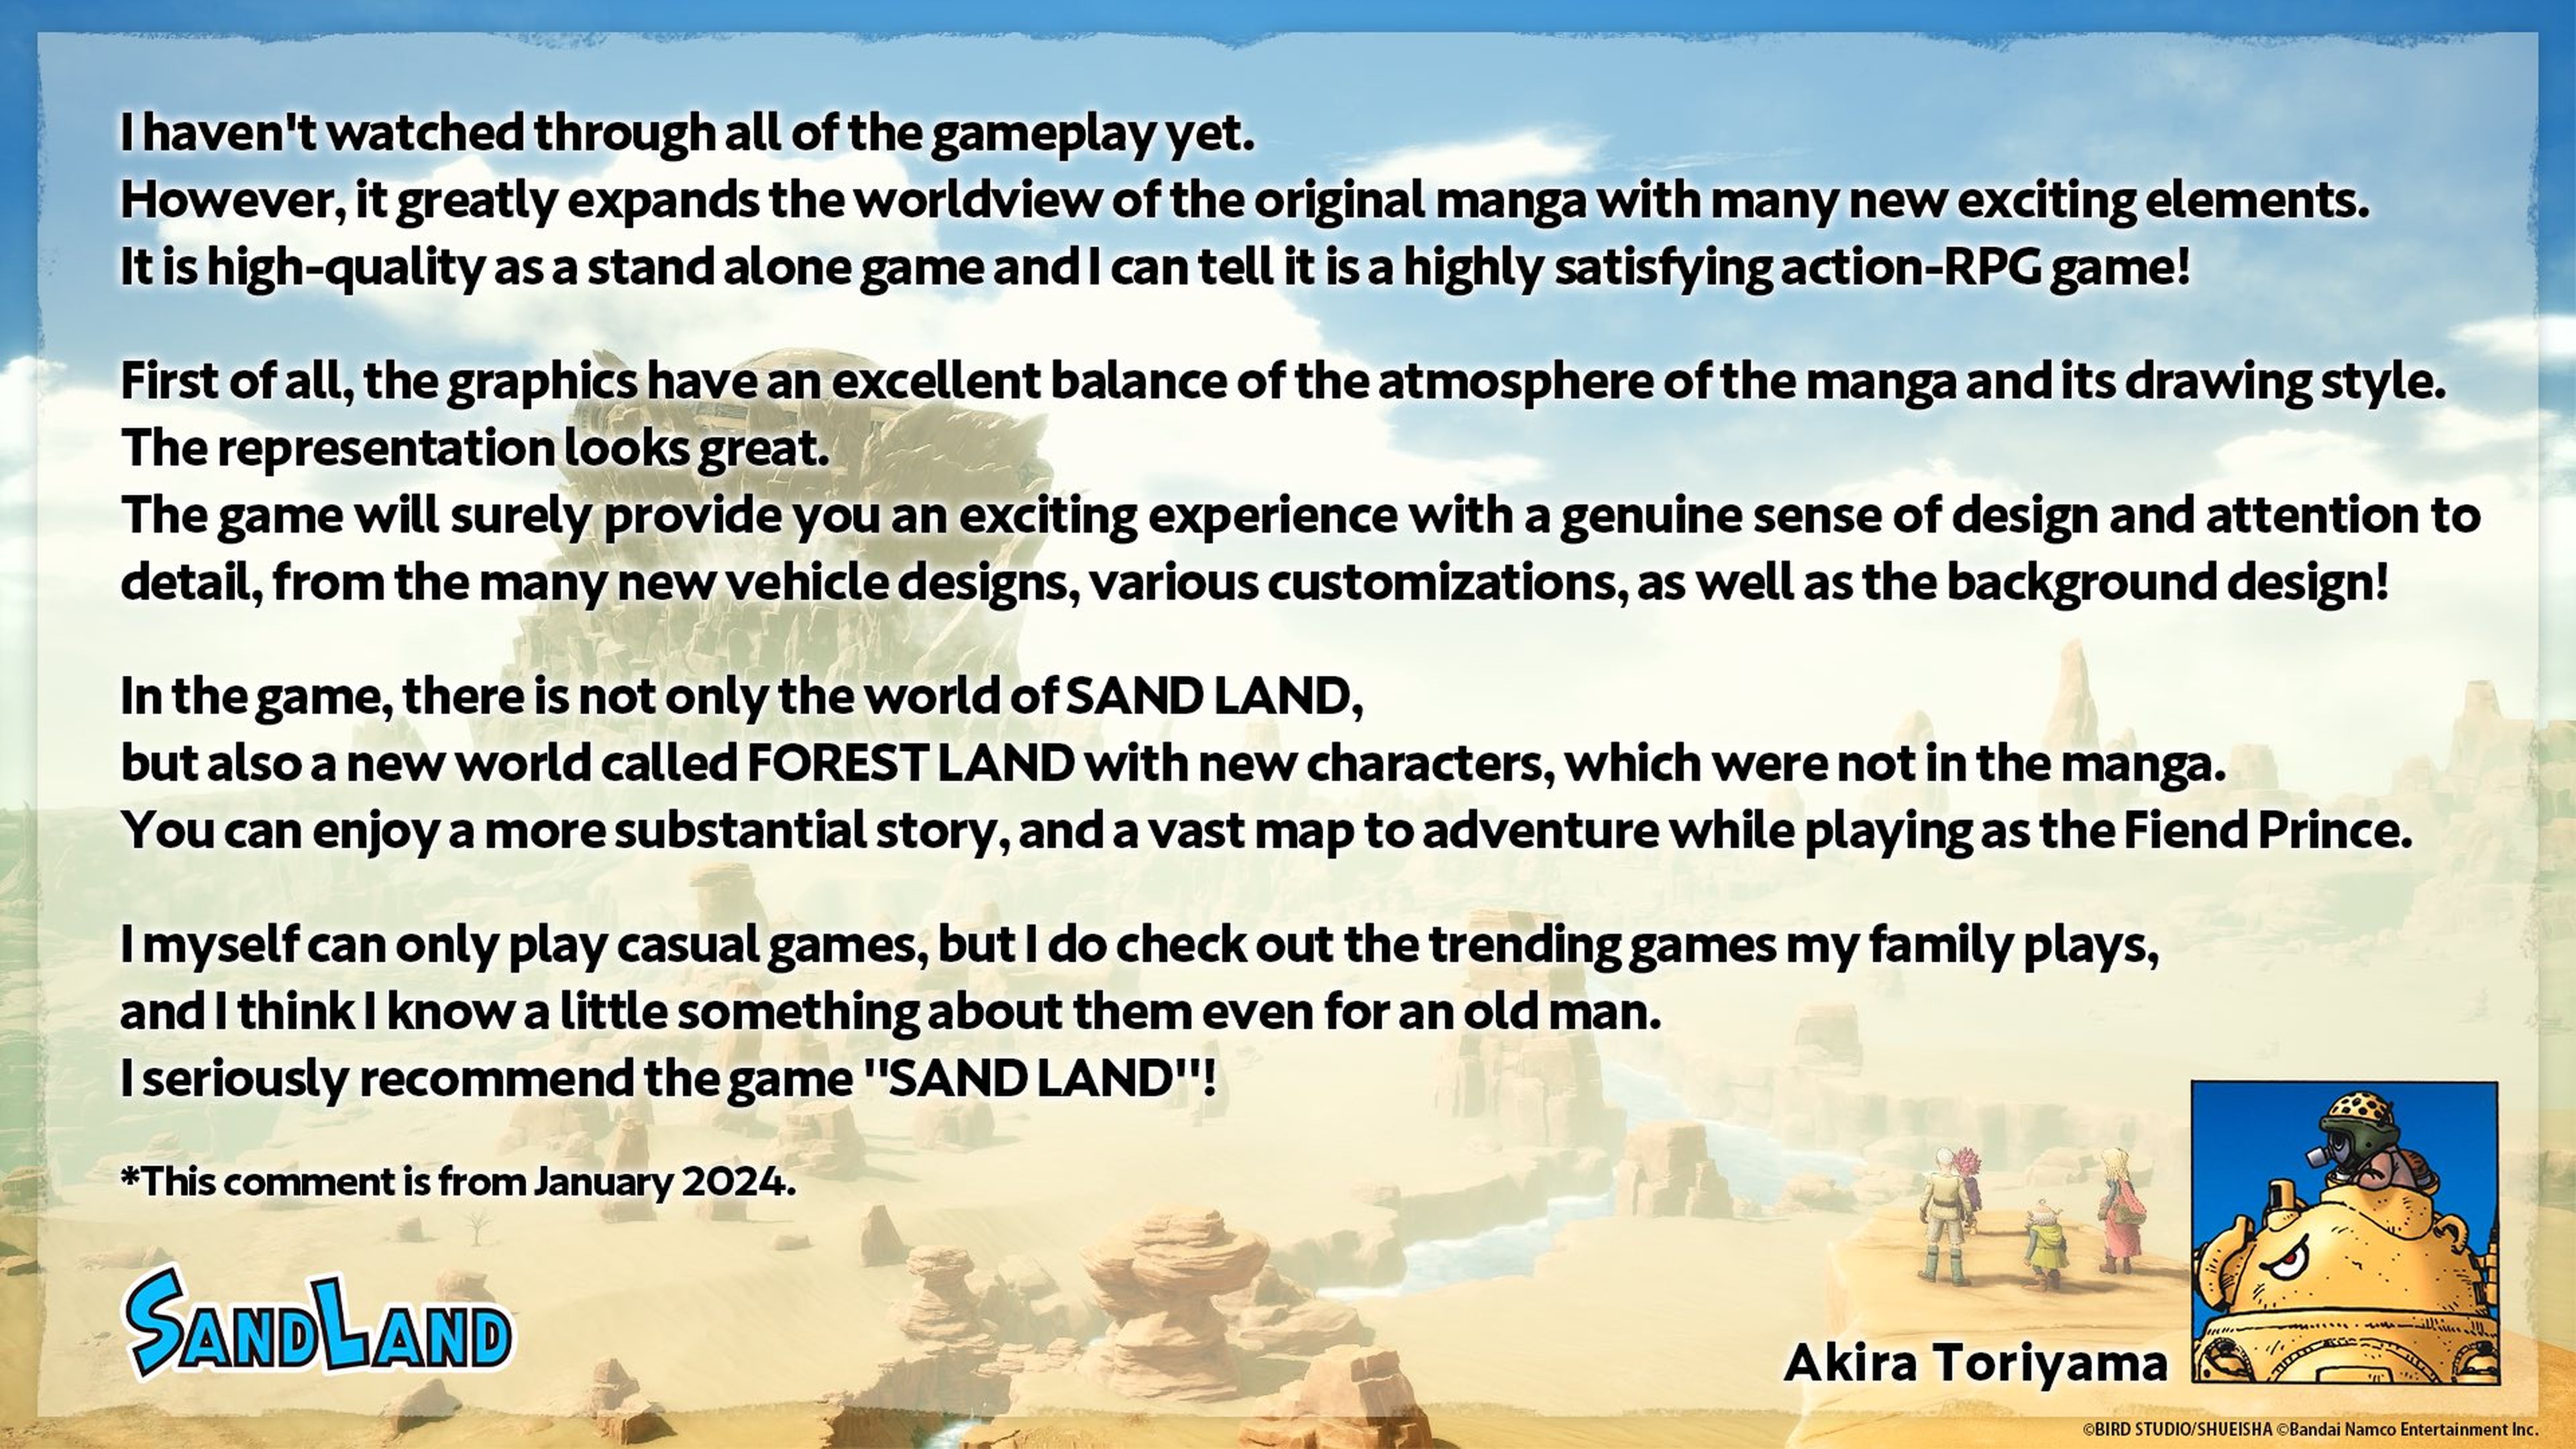 Mensaje de Akira Toriyama por el lanzamiento de Sand Land